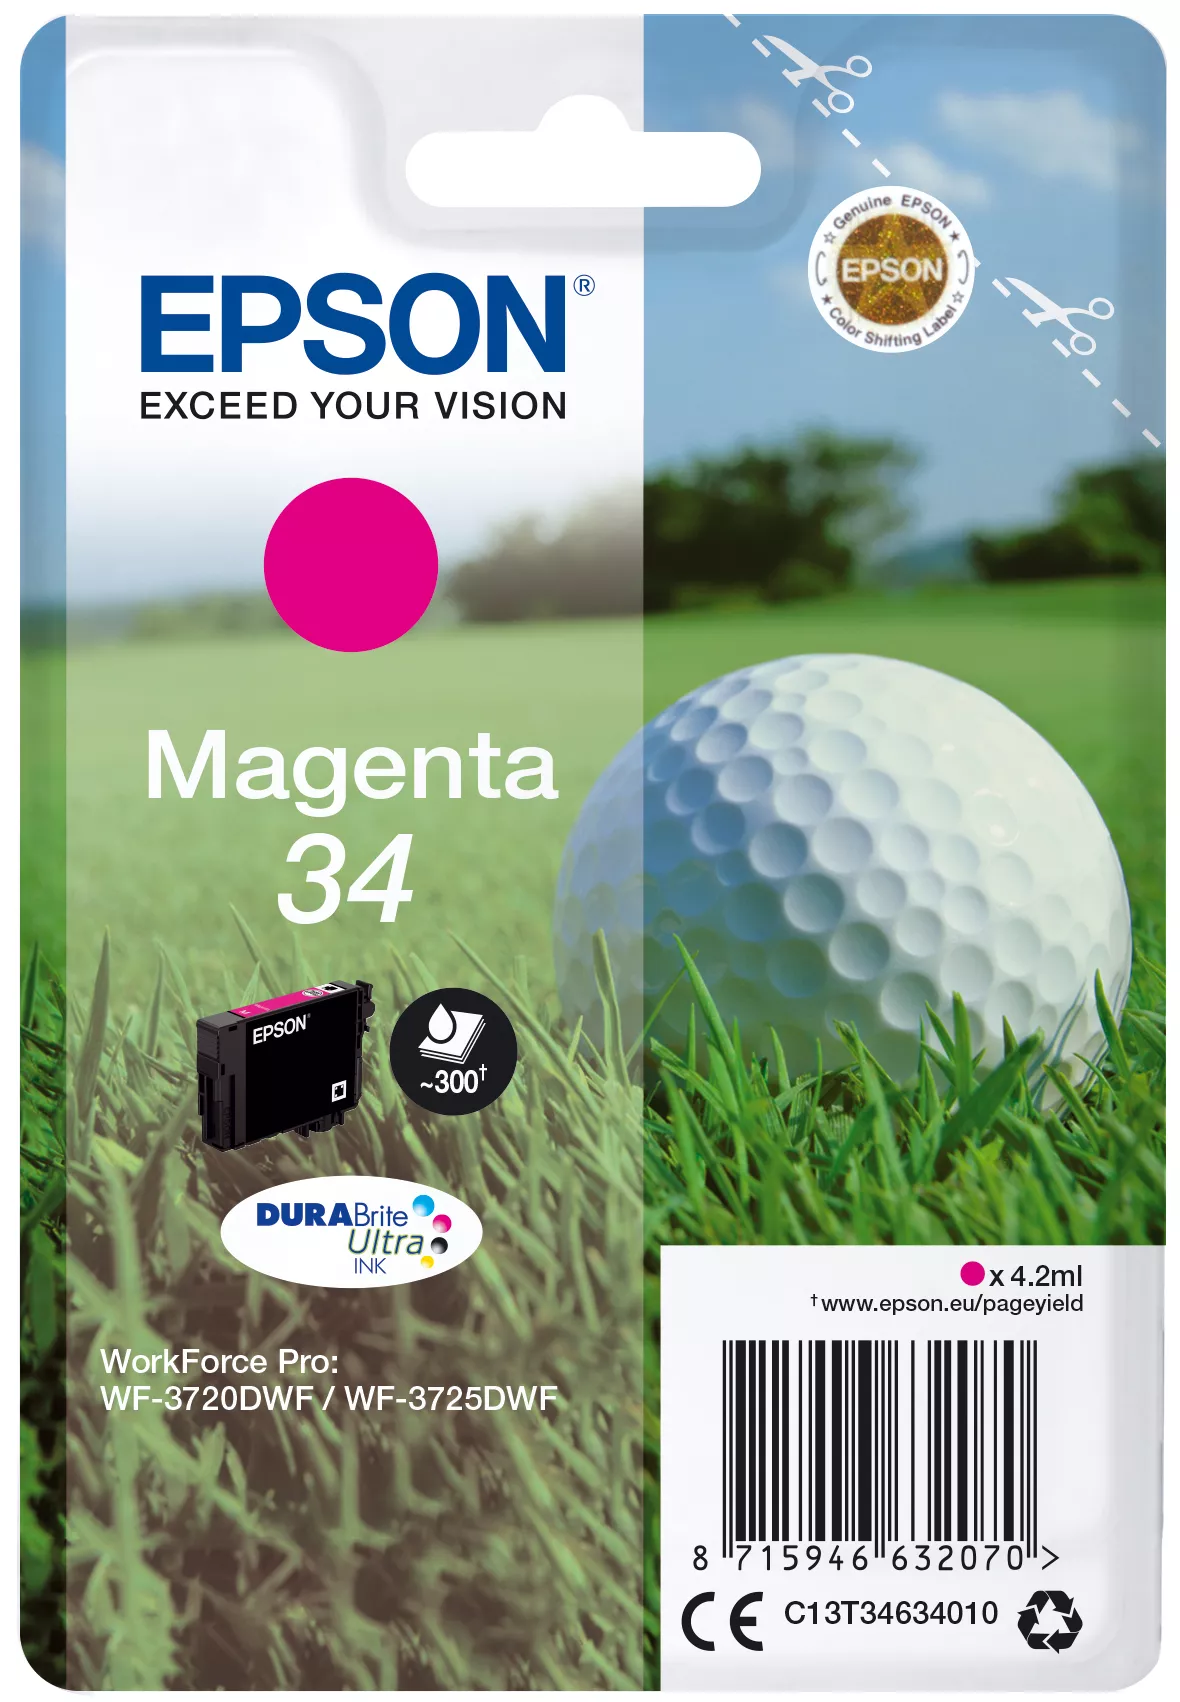 Achat EPSON Singlepack 34 Encre Magenta DURABrite Ultra 4,2ml - 8715946632087